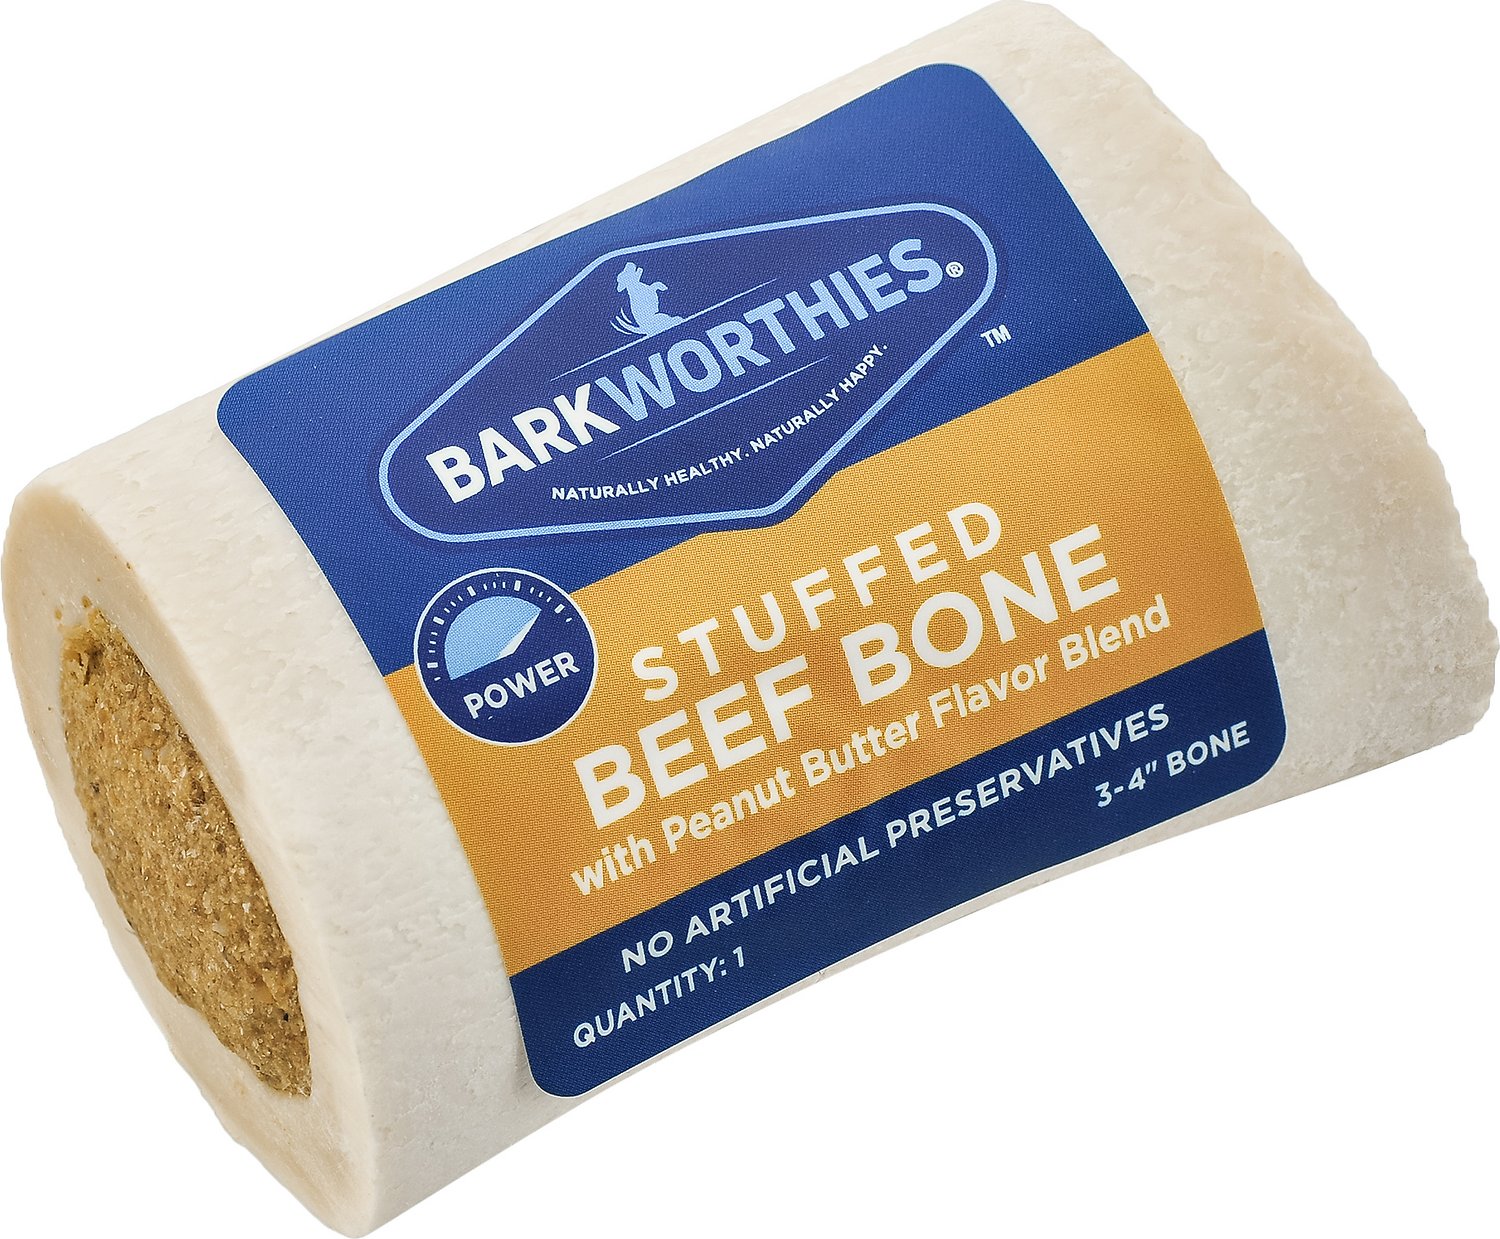 Barkworthies Stuffed Shin Bone Peanut Butter